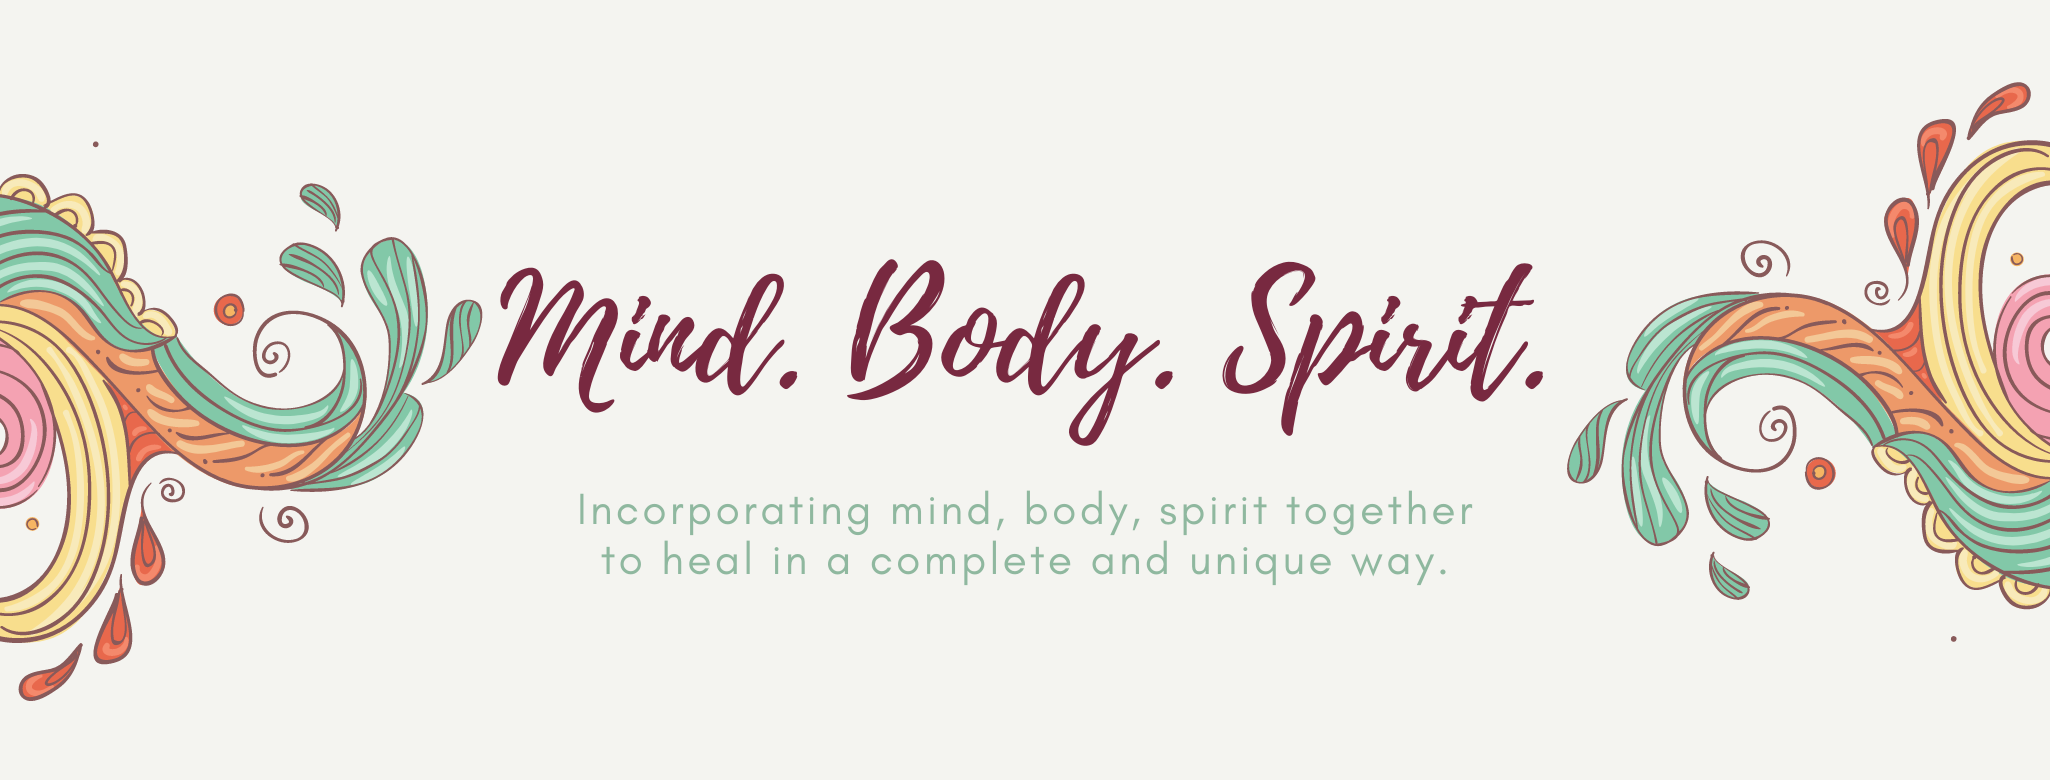 Mind. Body. Spirit.